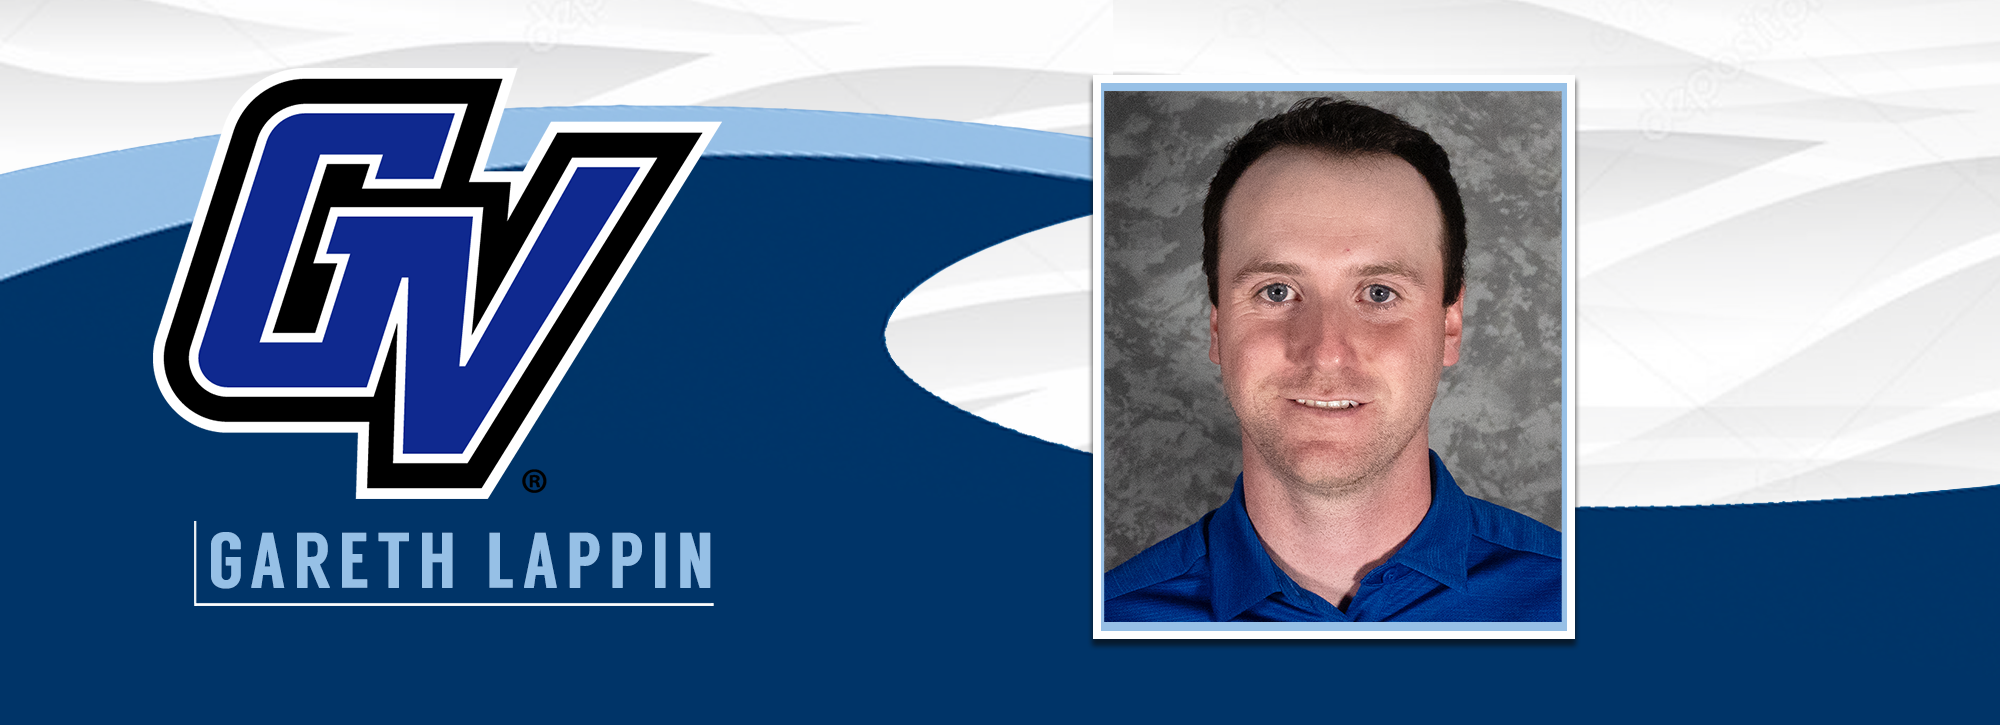 Gareth Lappin named GVSU head men's golf coach